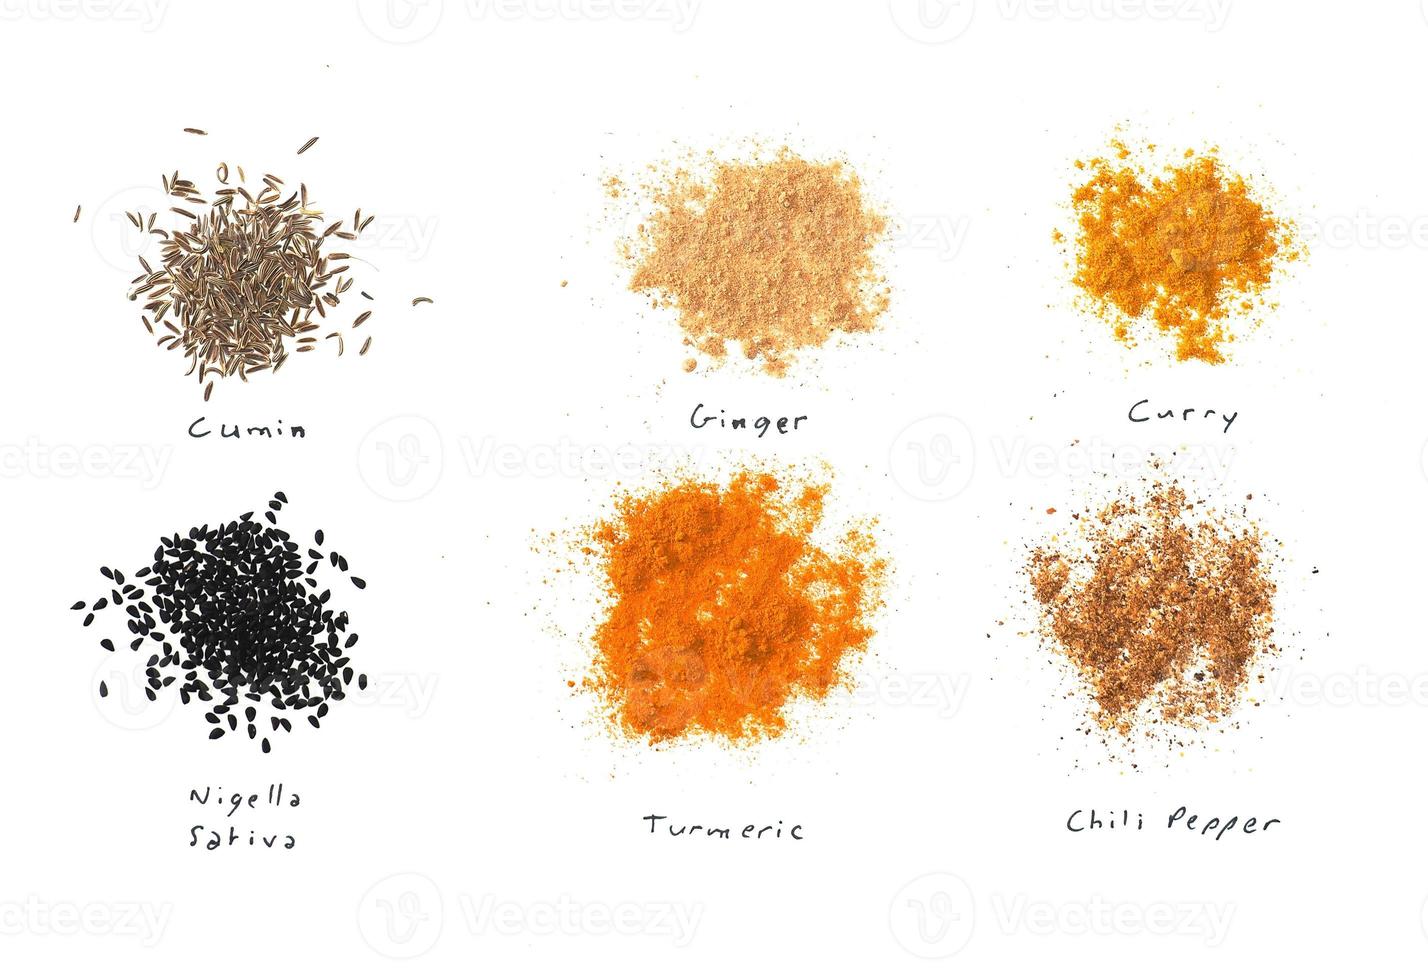 många kryddor inklusive ingefära curry gurkmeja chilipeppar svart kummin nigella sativa över vita foto